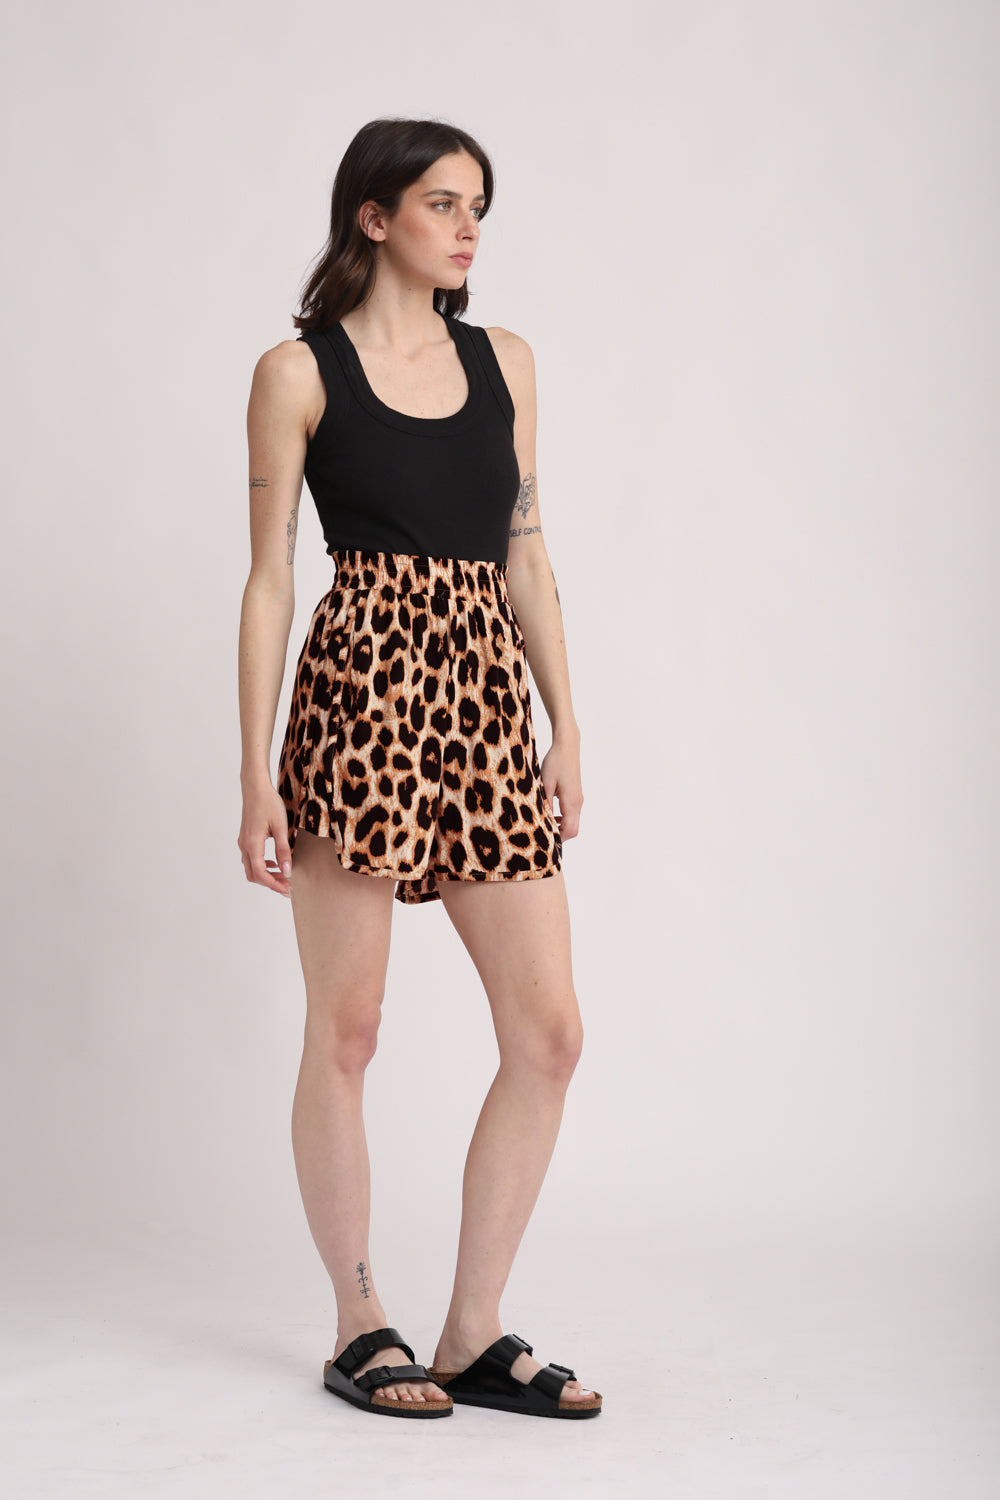 Buni's Leopard Shorts